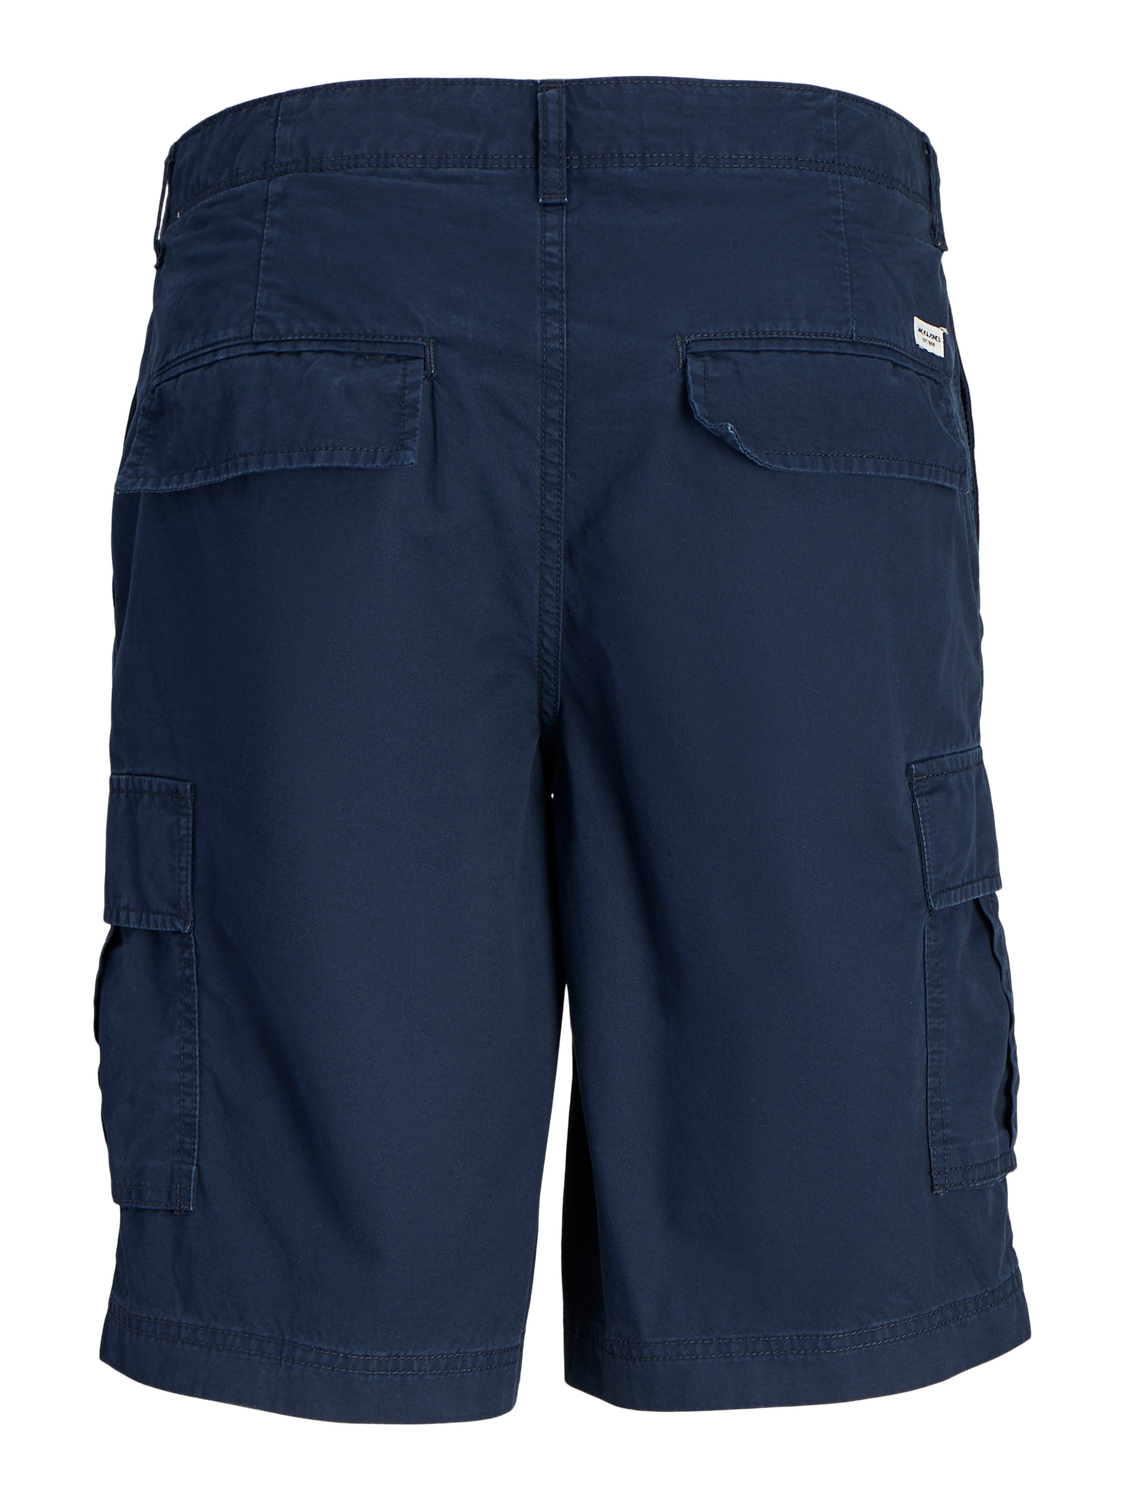 Men's Cole Cargo Shorts - Navy Blazer-Back View